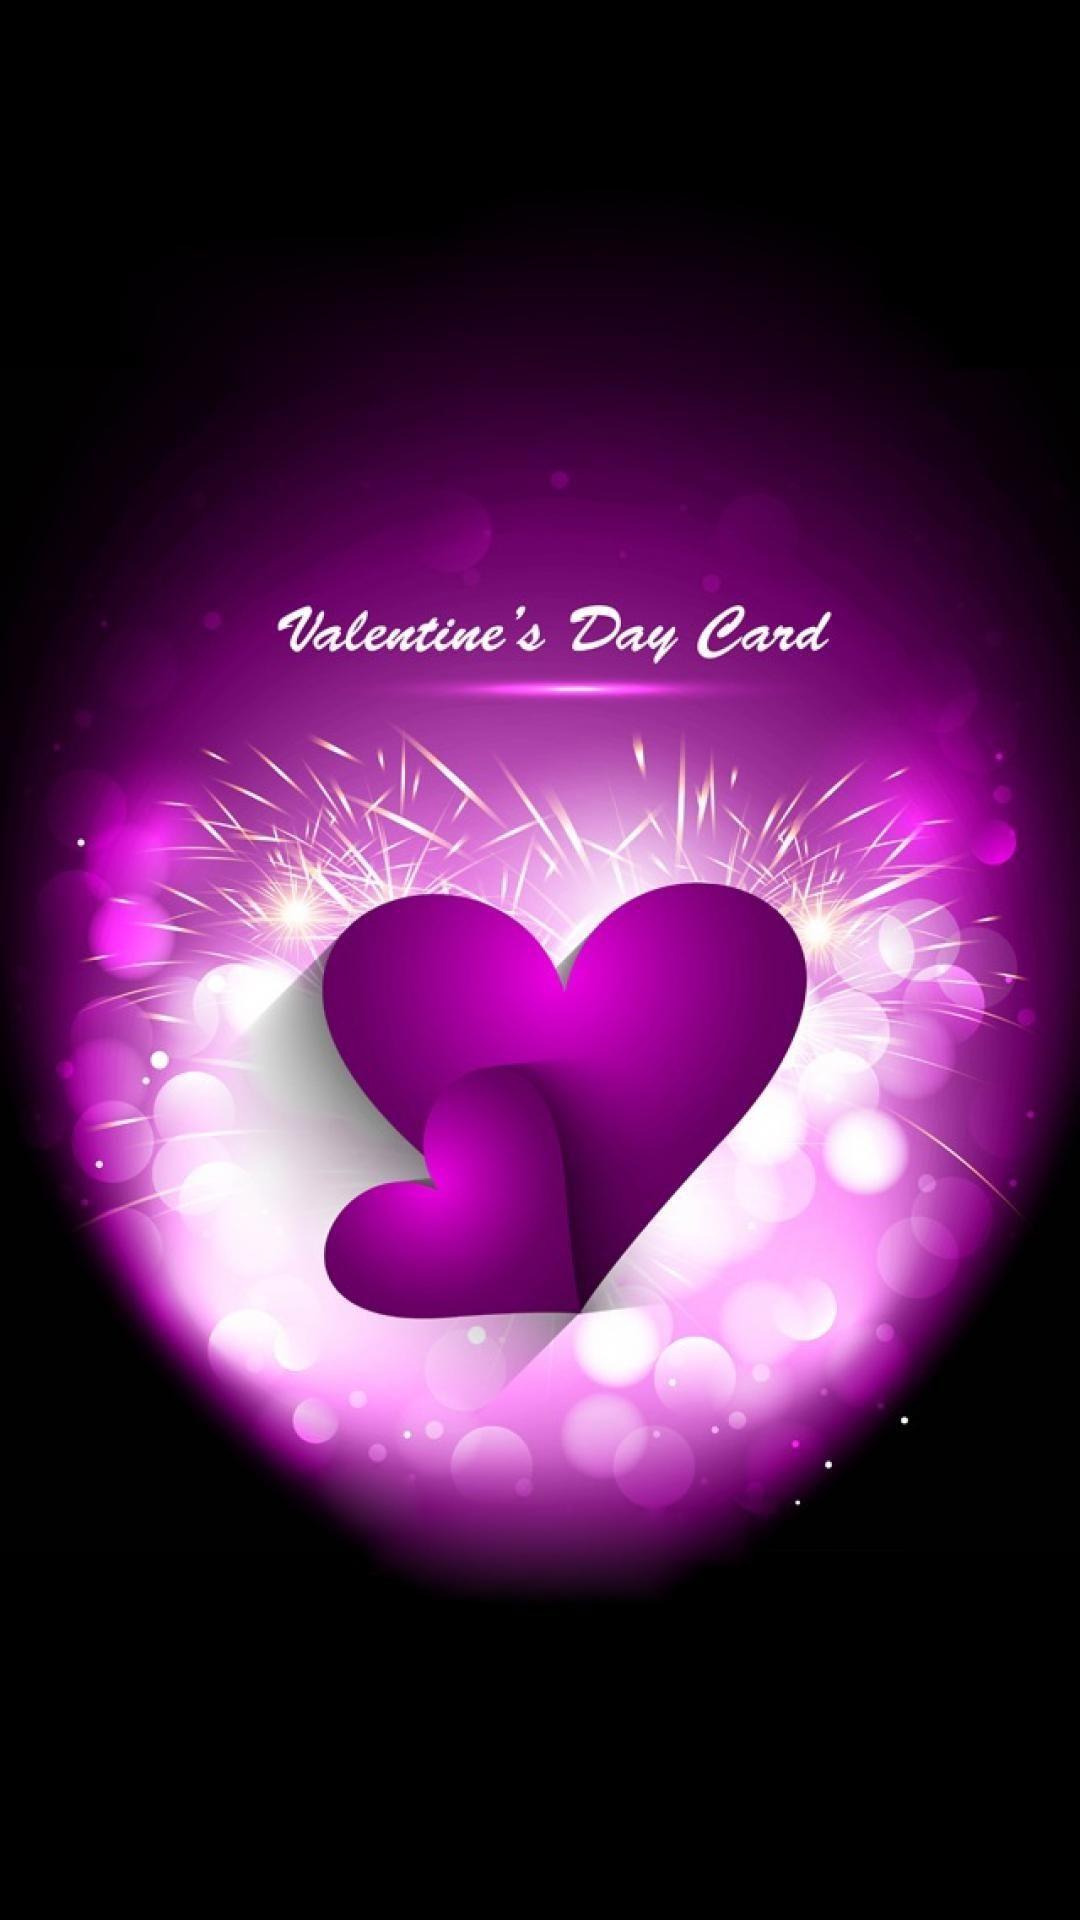 iphone 6 retina wallpaper. Valentine's day greeting cards